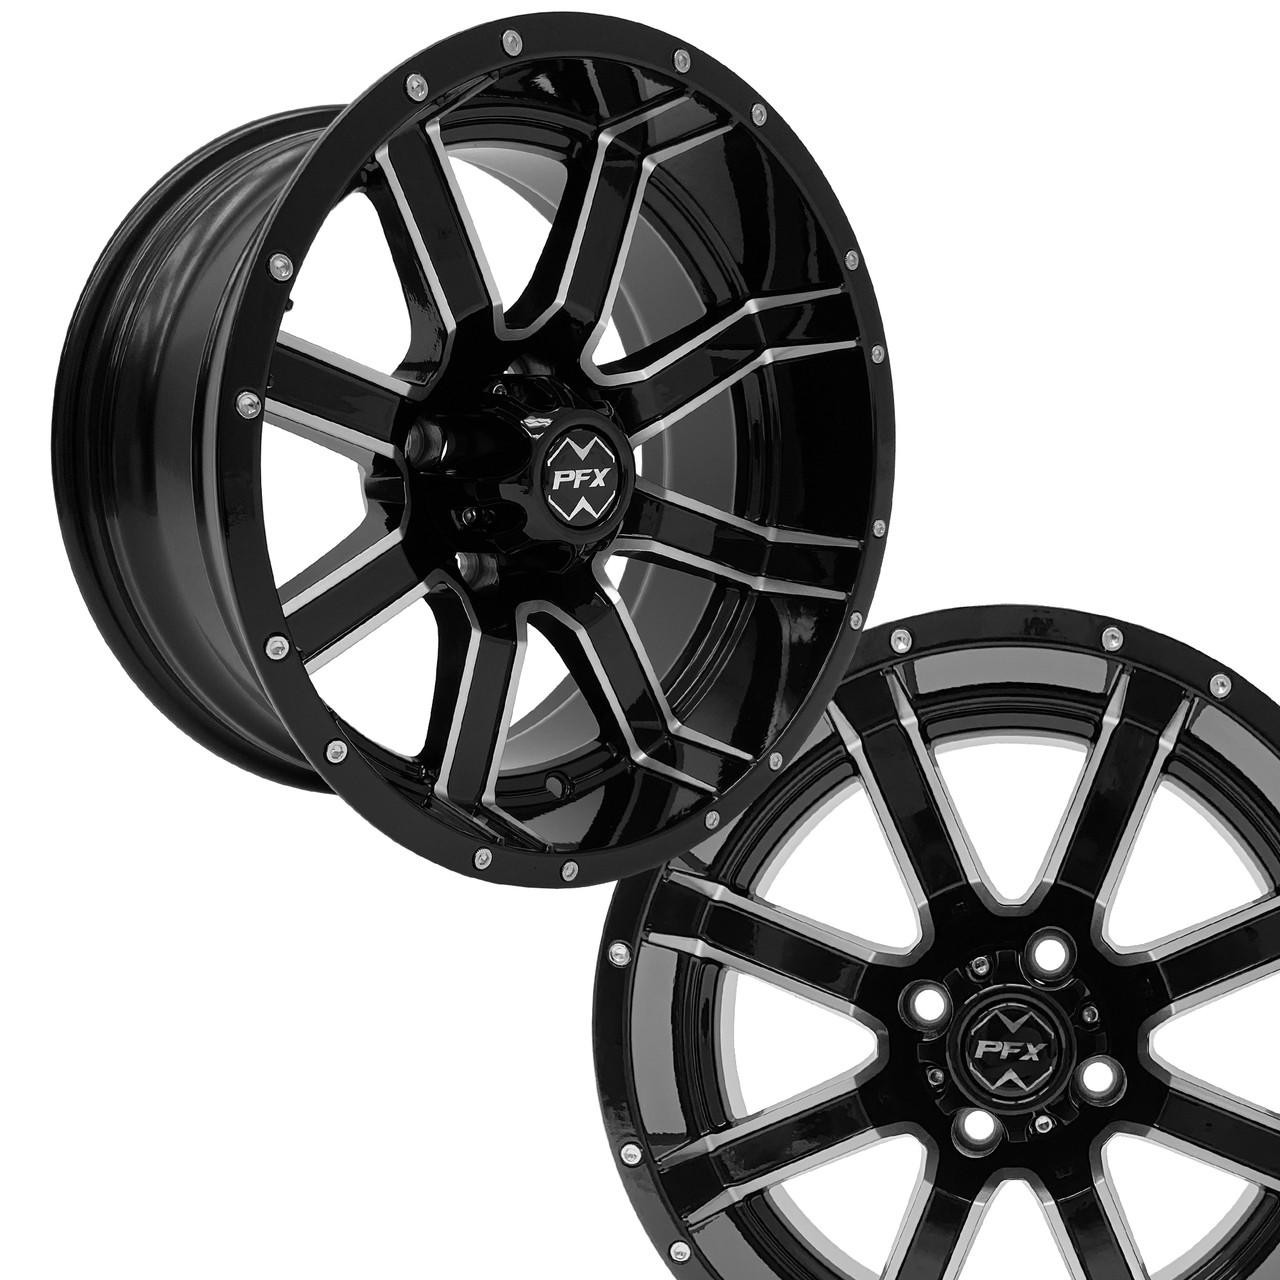 ProFormX 14" AMBUSH Gloss Black Wheels on 23x10x14 Sahara Classic Pro A/T Tires (Set of 4) 